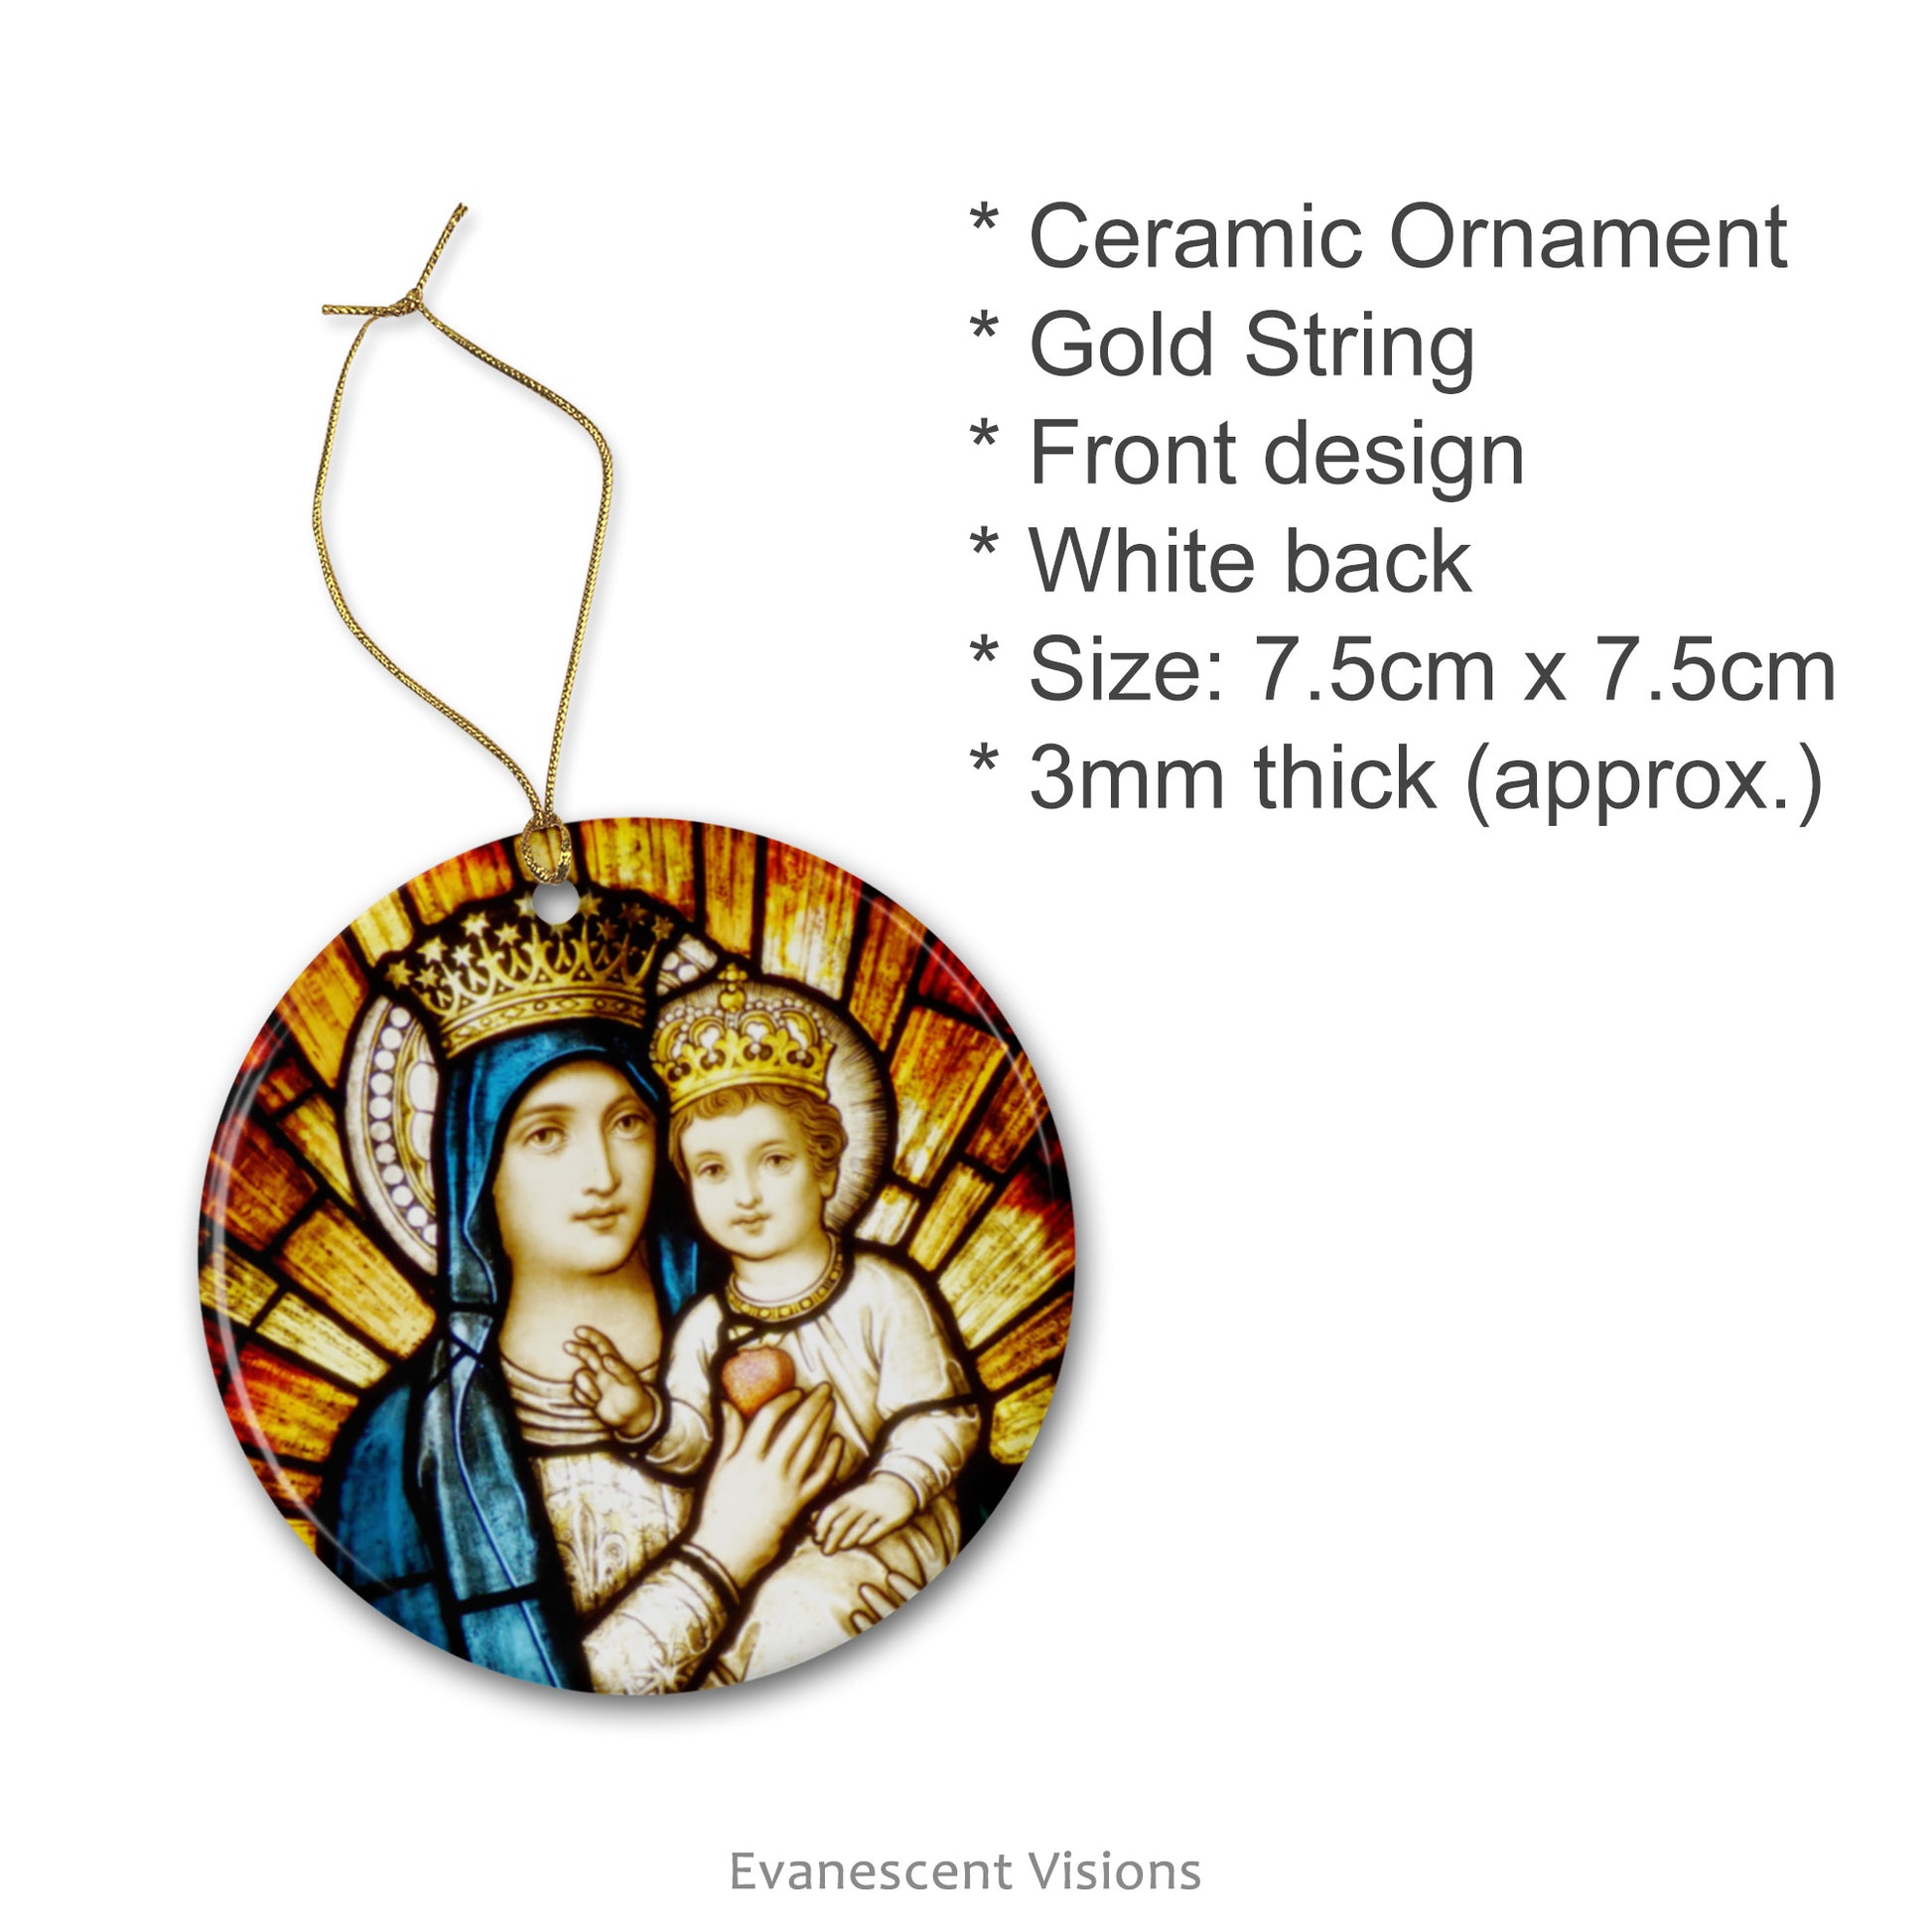 Product details of Ceramic Ornament.